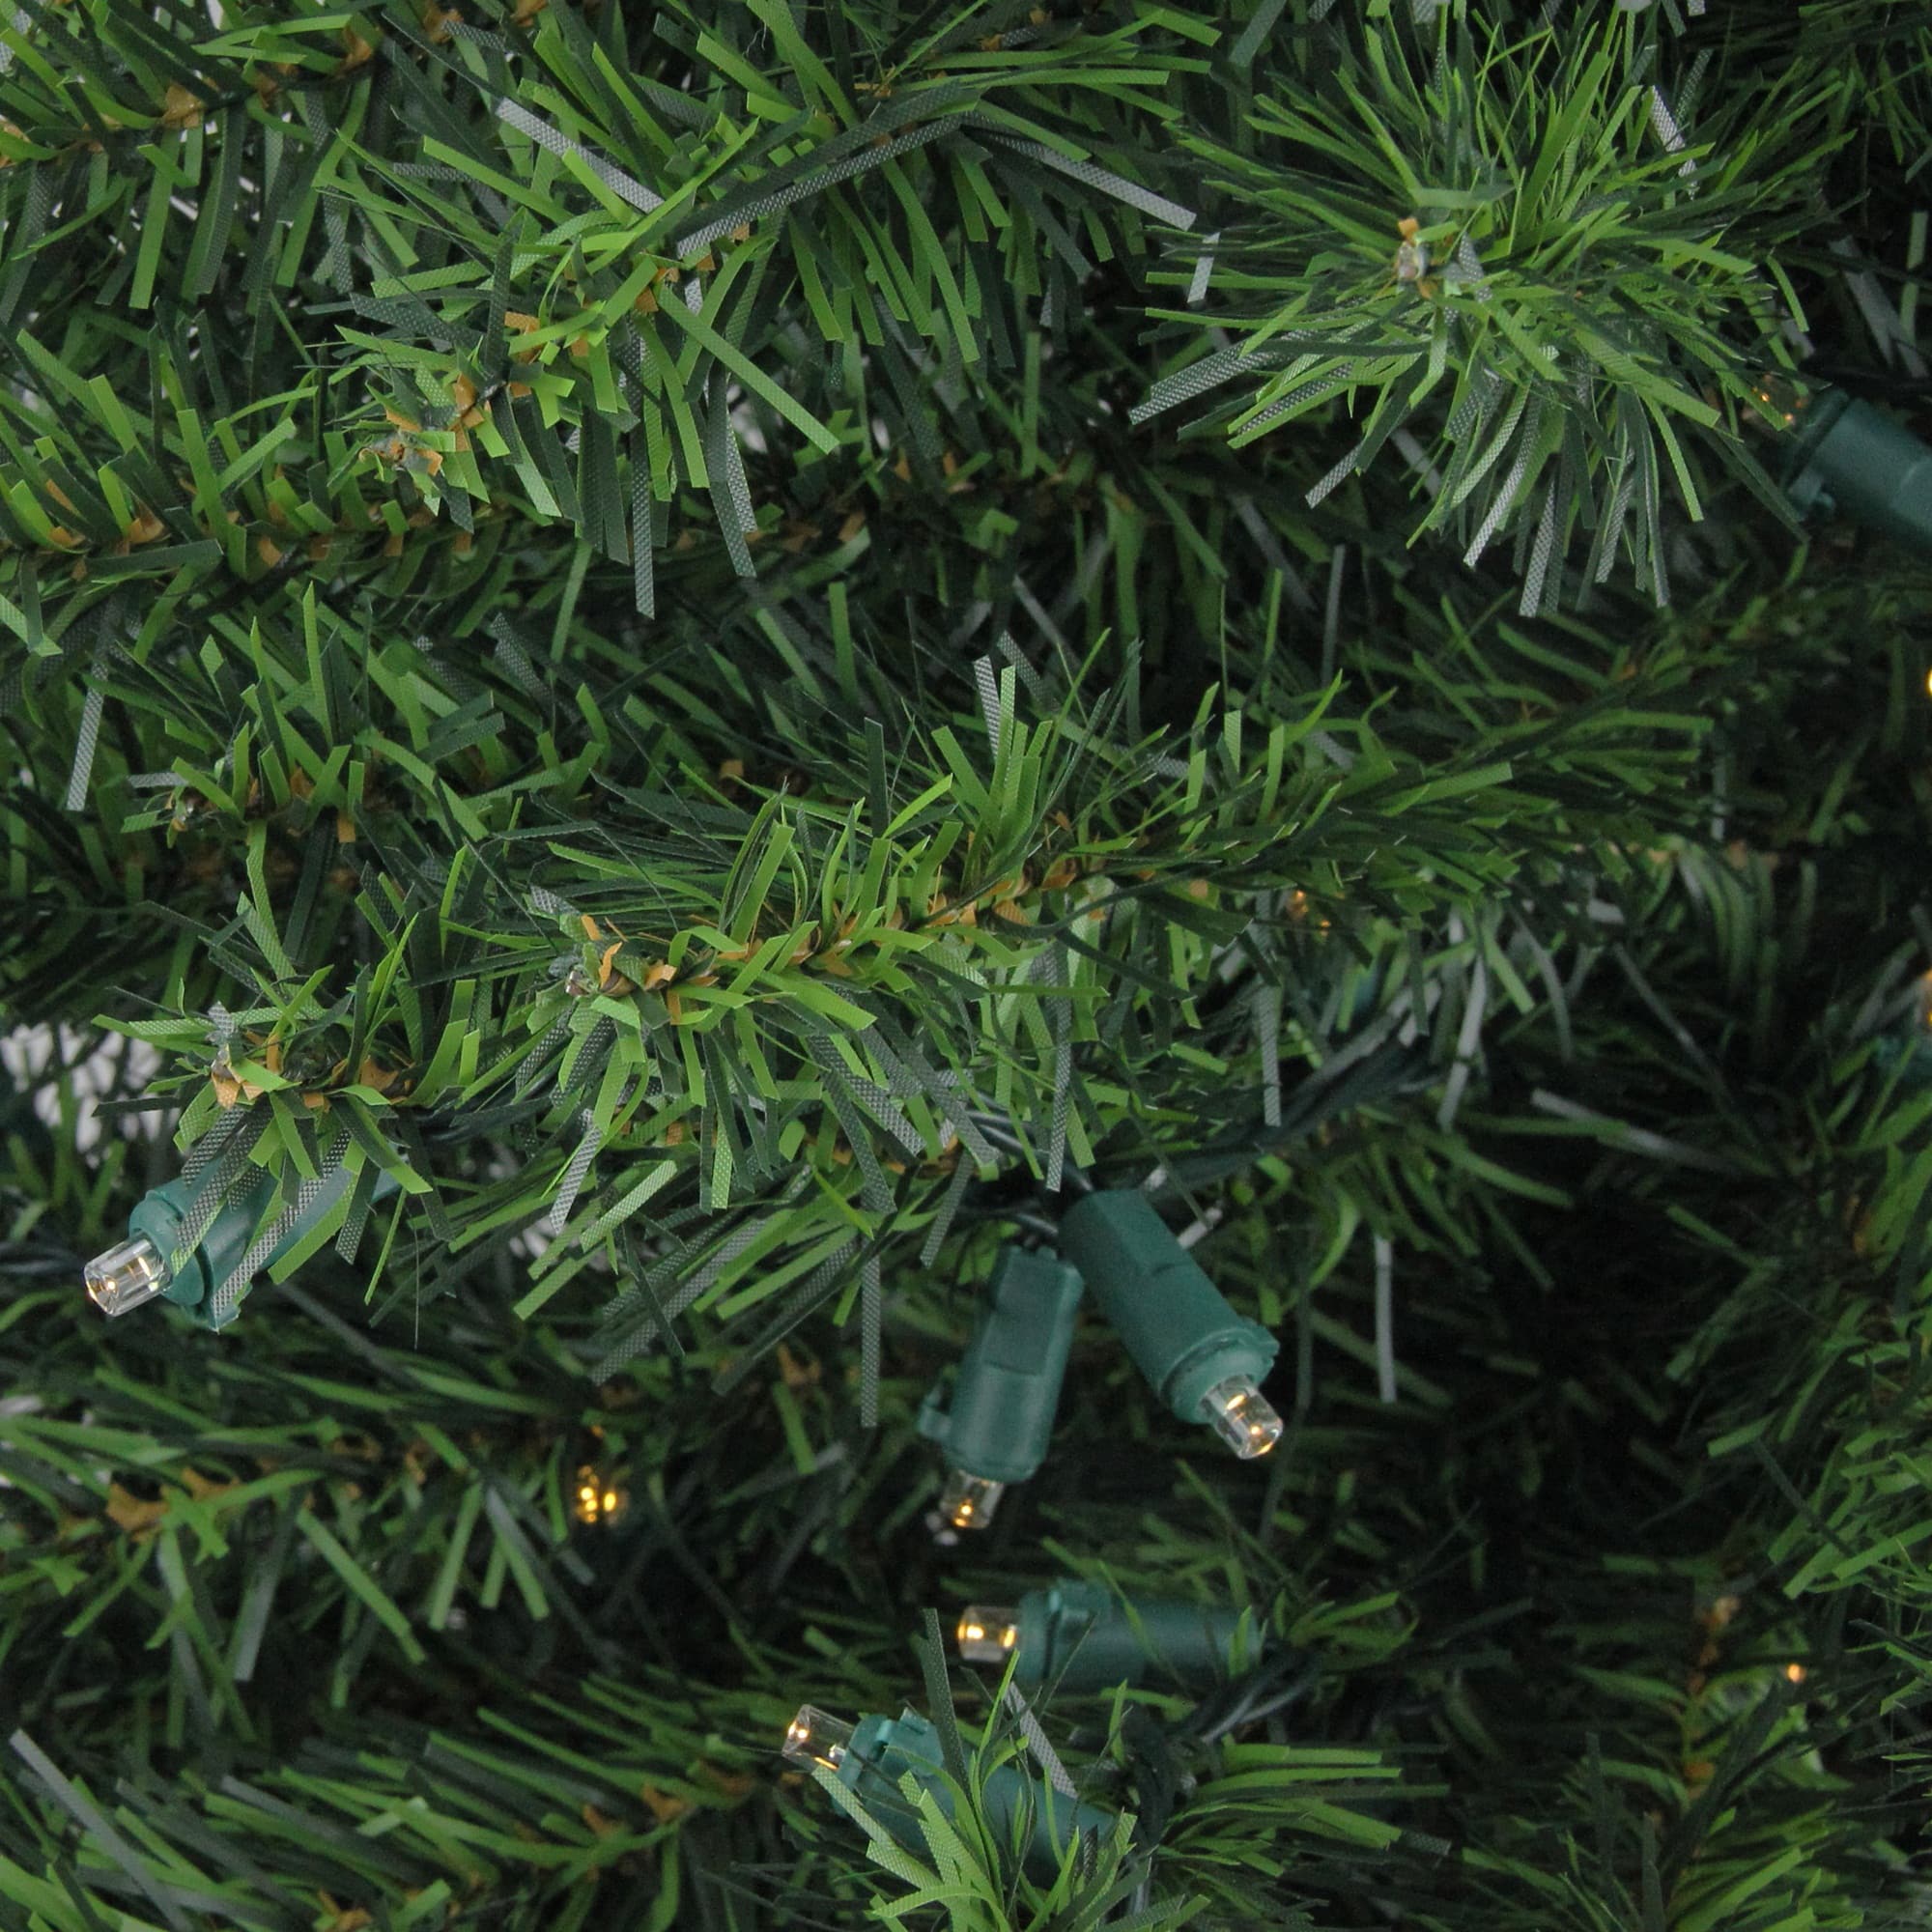 24&#x22; Pre-Lit Canadian Pine Artificial Christmas Wreath